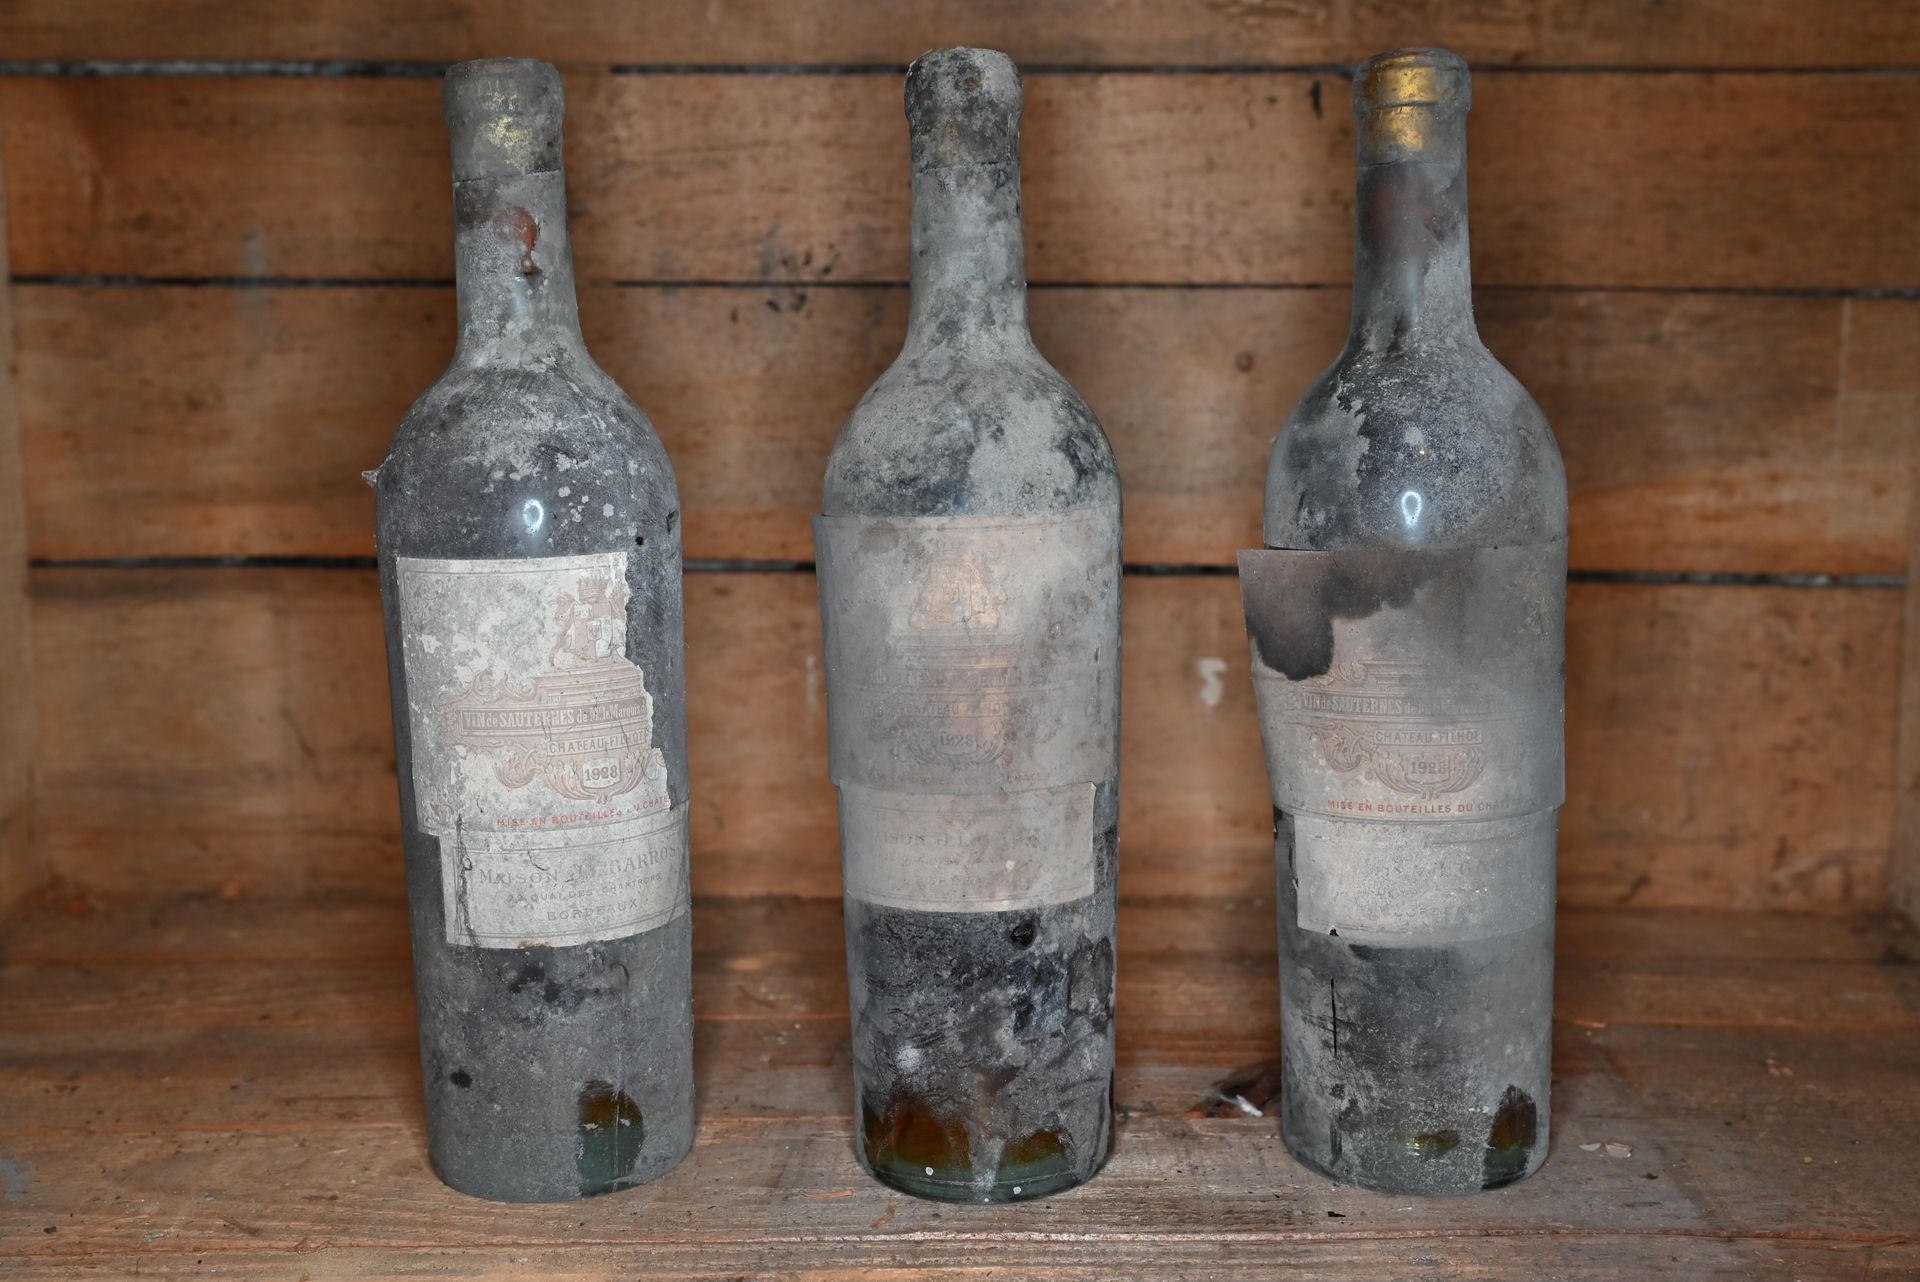 Null 3 瓶 Château Filhot Sauternes 1928。卢尔-萨卢塞侯爵 

标签、瓶塞或瓶子或大瓶装葡萄酒的状况不会受到任何投诉。